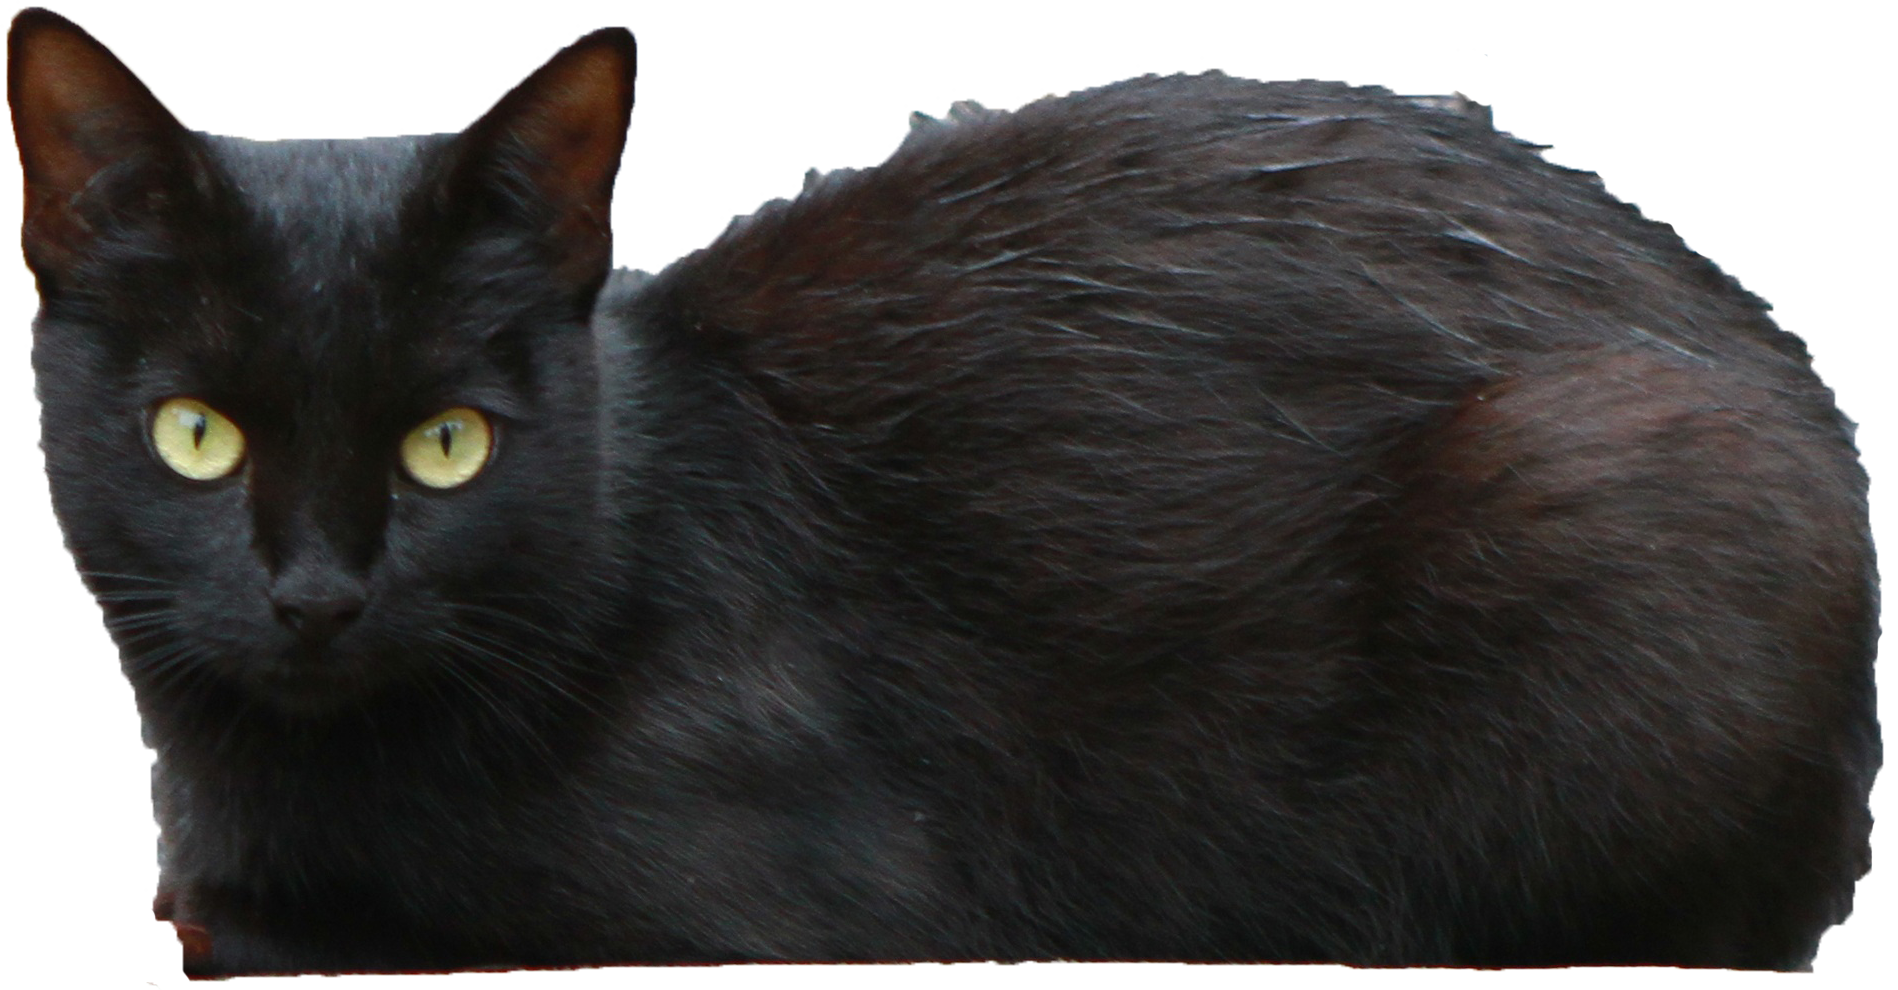 Black cat png images